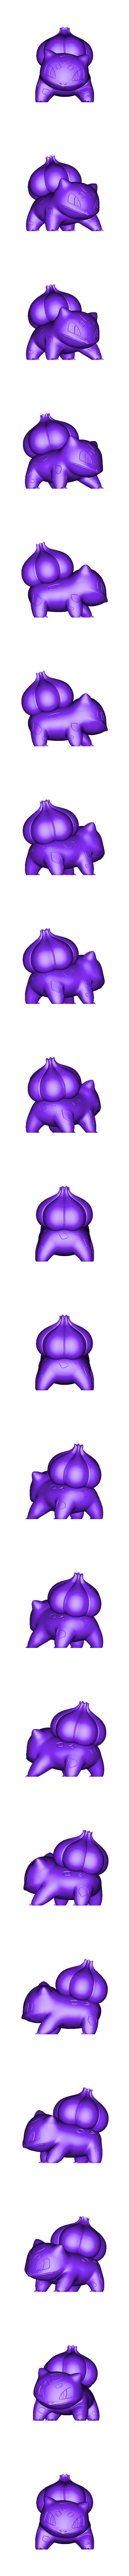 bulba_standing.stl Download STL file Bulbasaur( 2 different poses) • Design to 3D print, erickantunesxd123